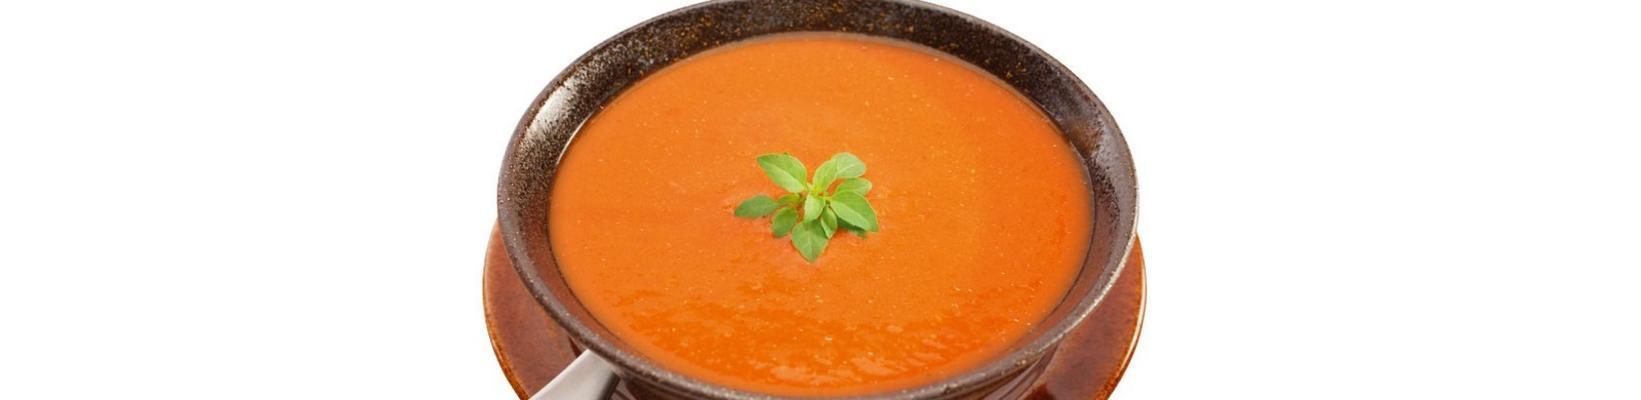 tomato soup from gerda blom